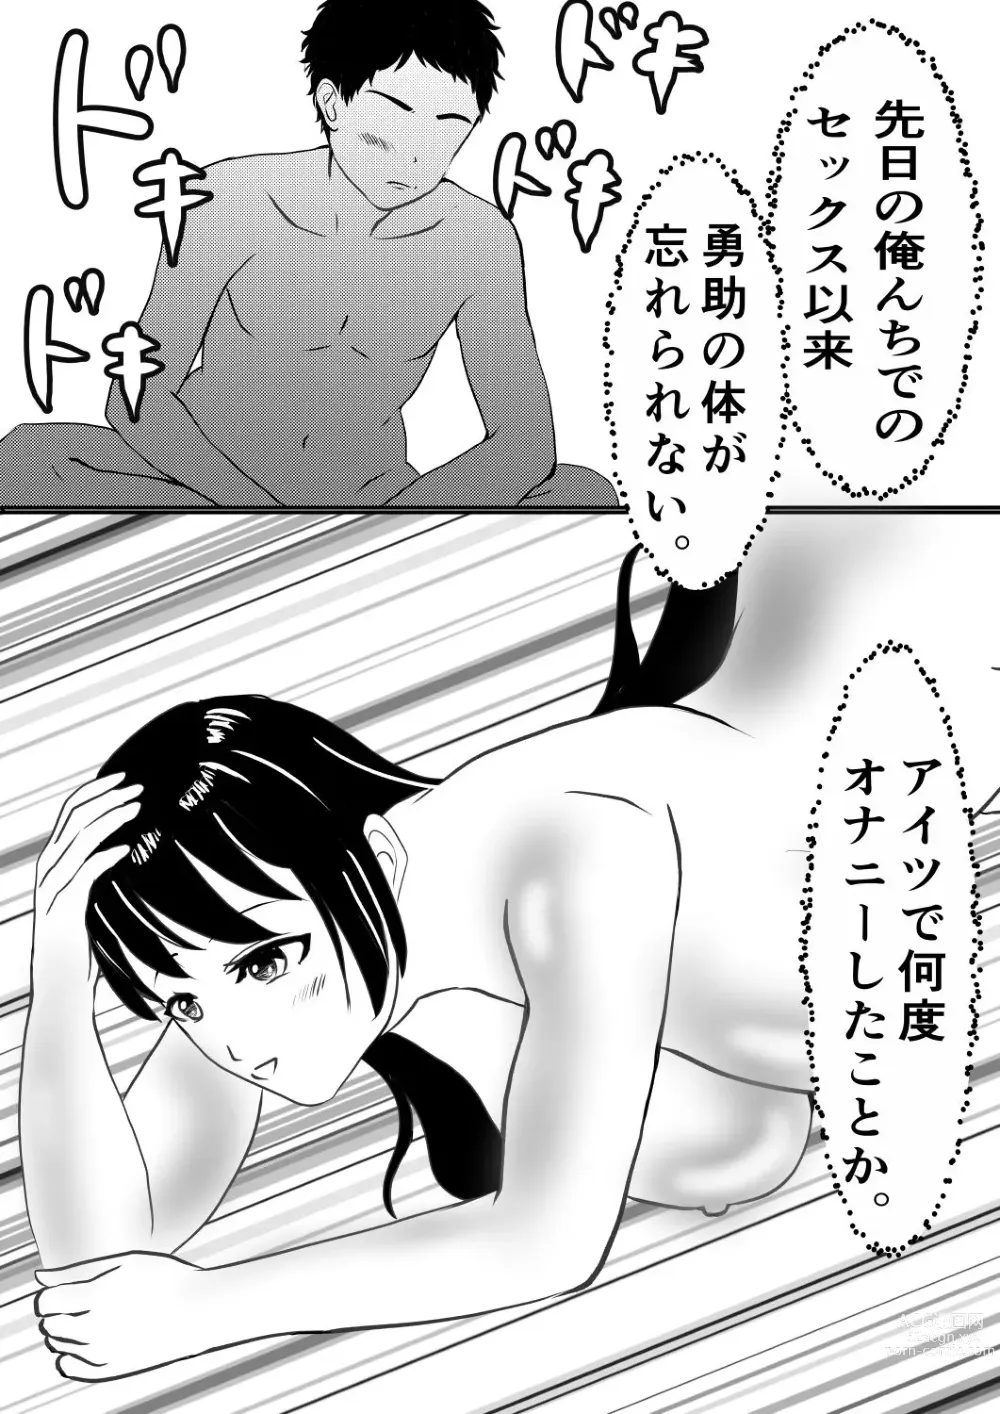 Page 18 of doujinshi 皮をかぶった親友が最高のセフレになった話。